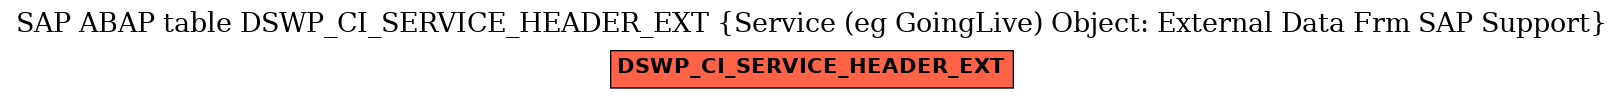 E-R Diagram for table DSWP_CI_SERVICE_HEADER_EXT (Service (eg GoingLive) Object: External Data Frm SAP Support)